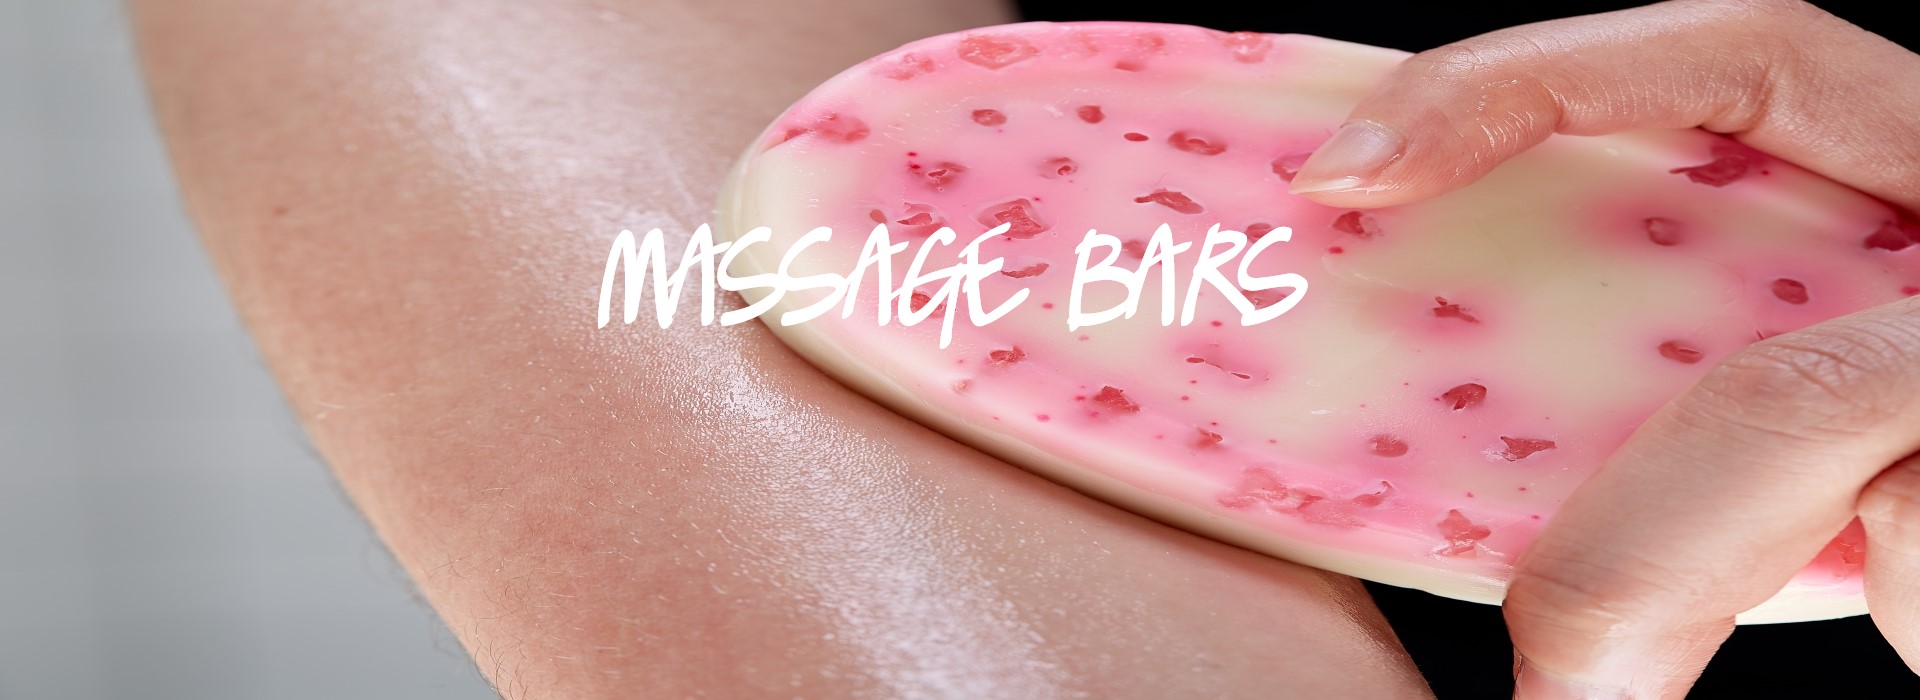 Massage Bars